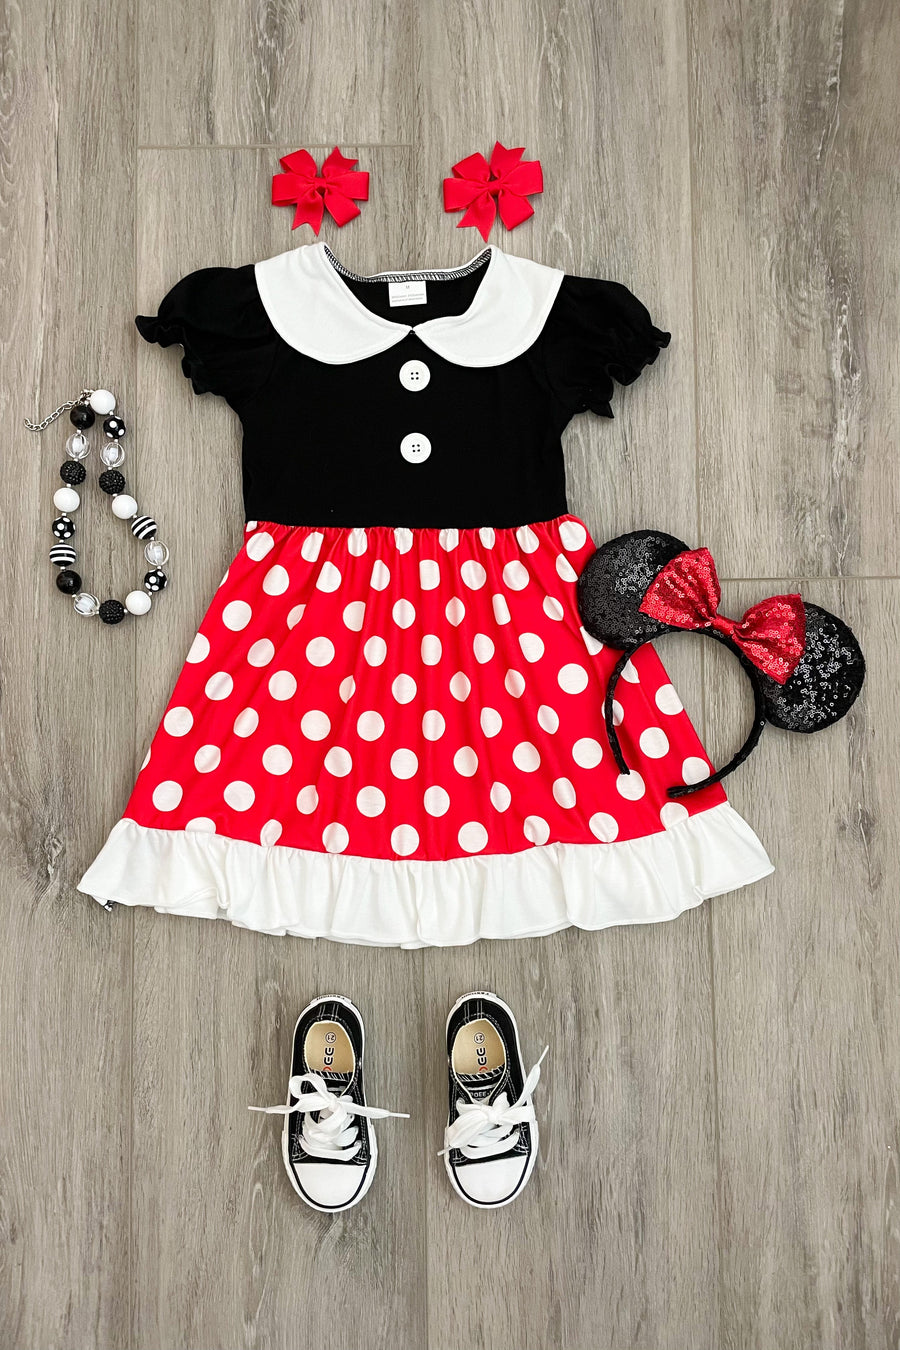 Red/Black Polka Dot Boutique Dress - Rylee Faith Designs